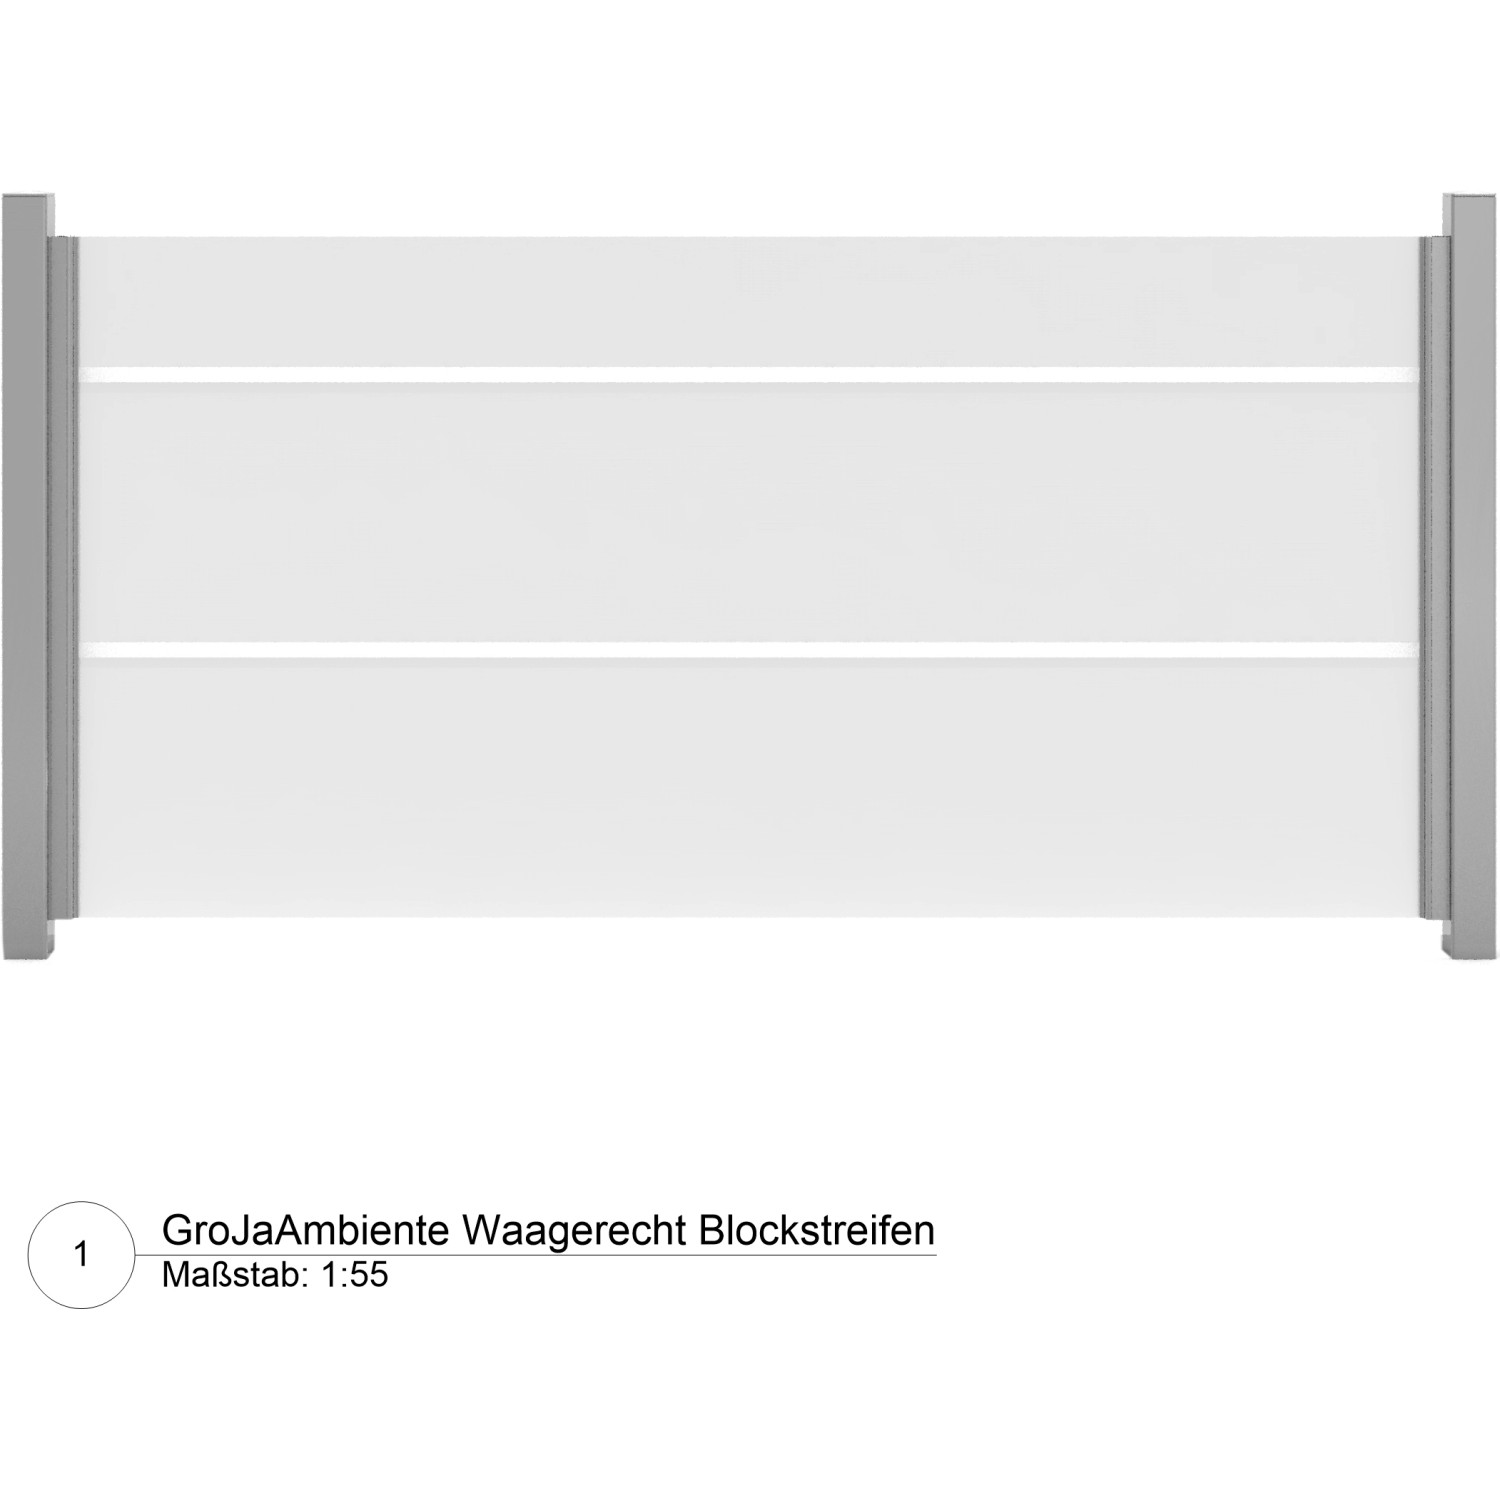 GroJa Ambiente Waagerecht Blockstreifen 180 cm x 90 cm x 0,8 cm